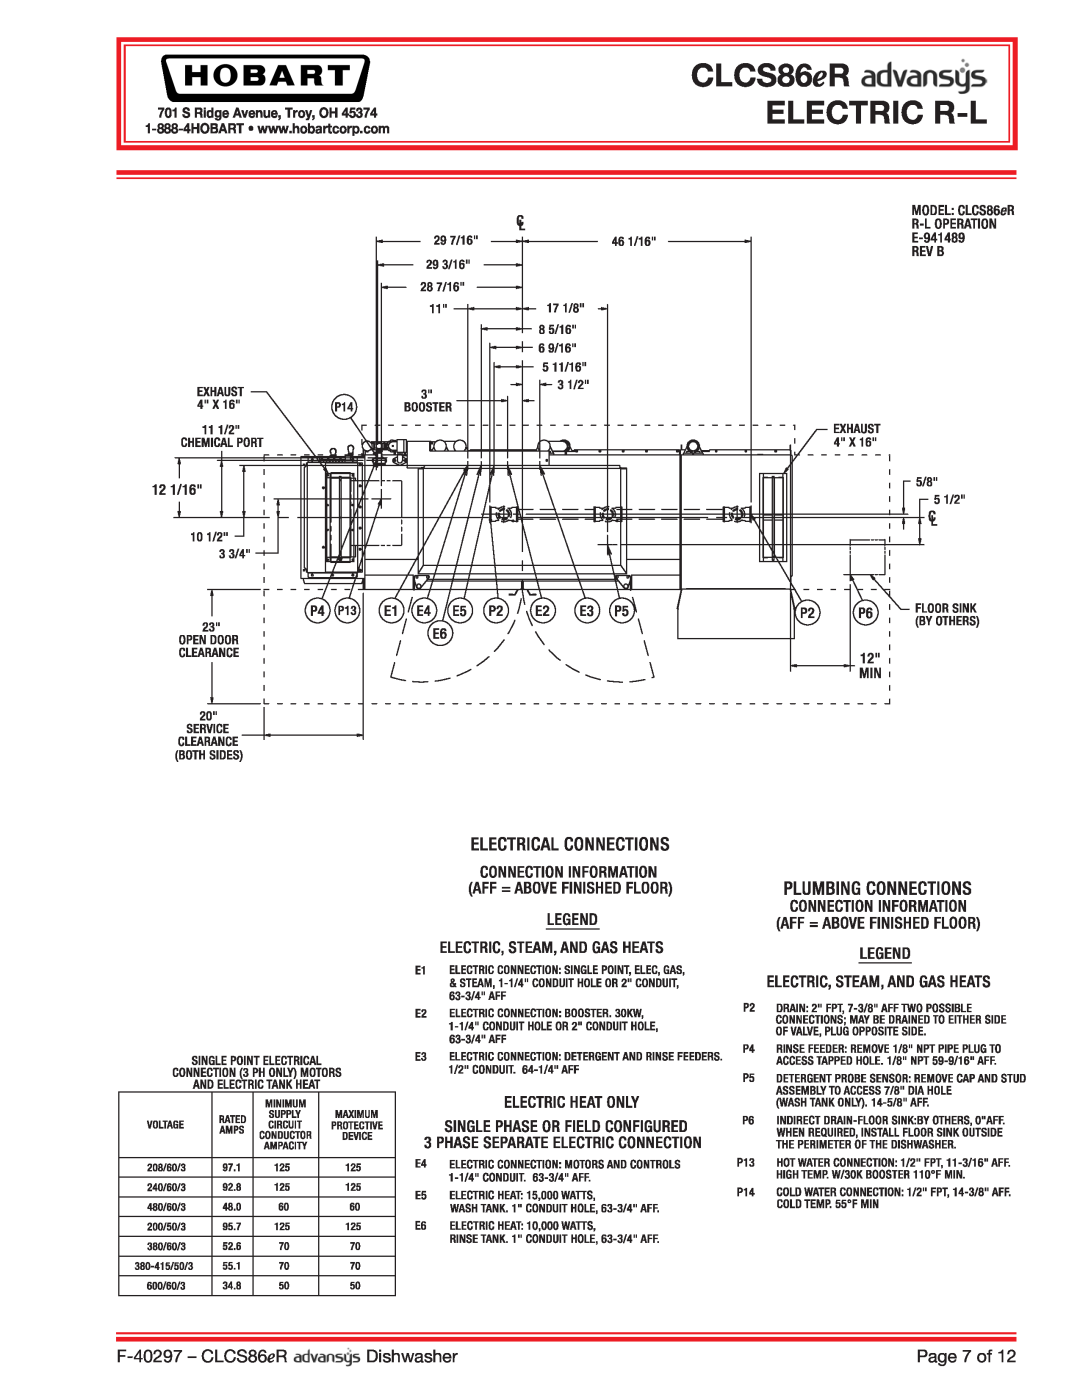 Hobart CLCS86ER dimensions CLCS86eR ELECTRIC R-L, F-40297- CLCS86eR, Dishwasher, Page 7 of, S Ridge Avenue, Troy, OH 